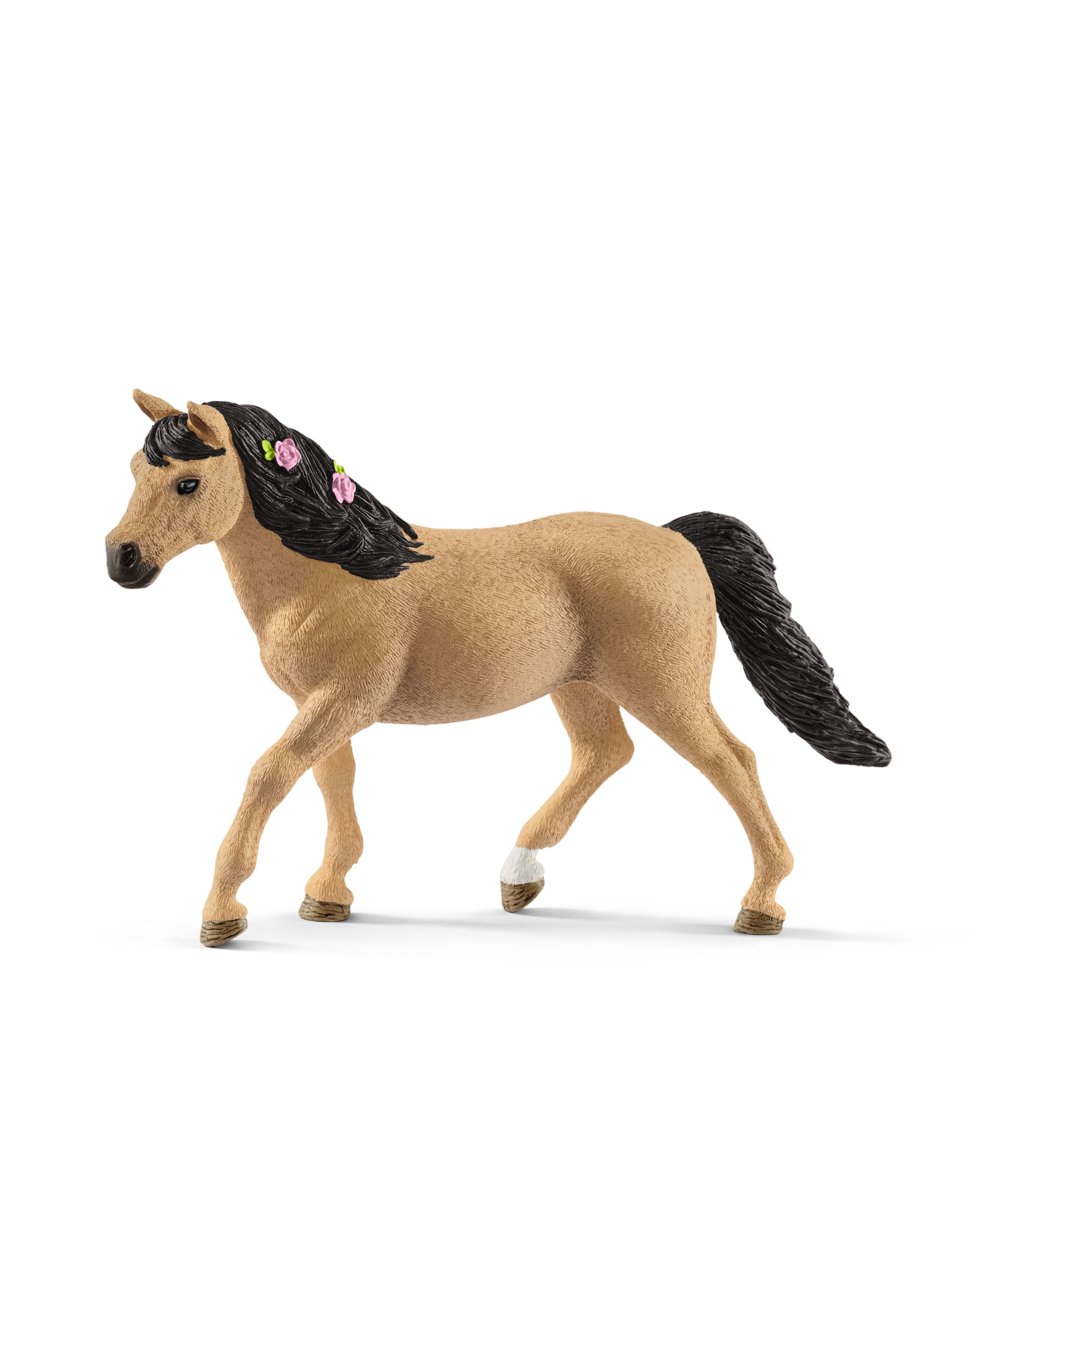 Tierfigur Connemara Pony Stute Standard Standard